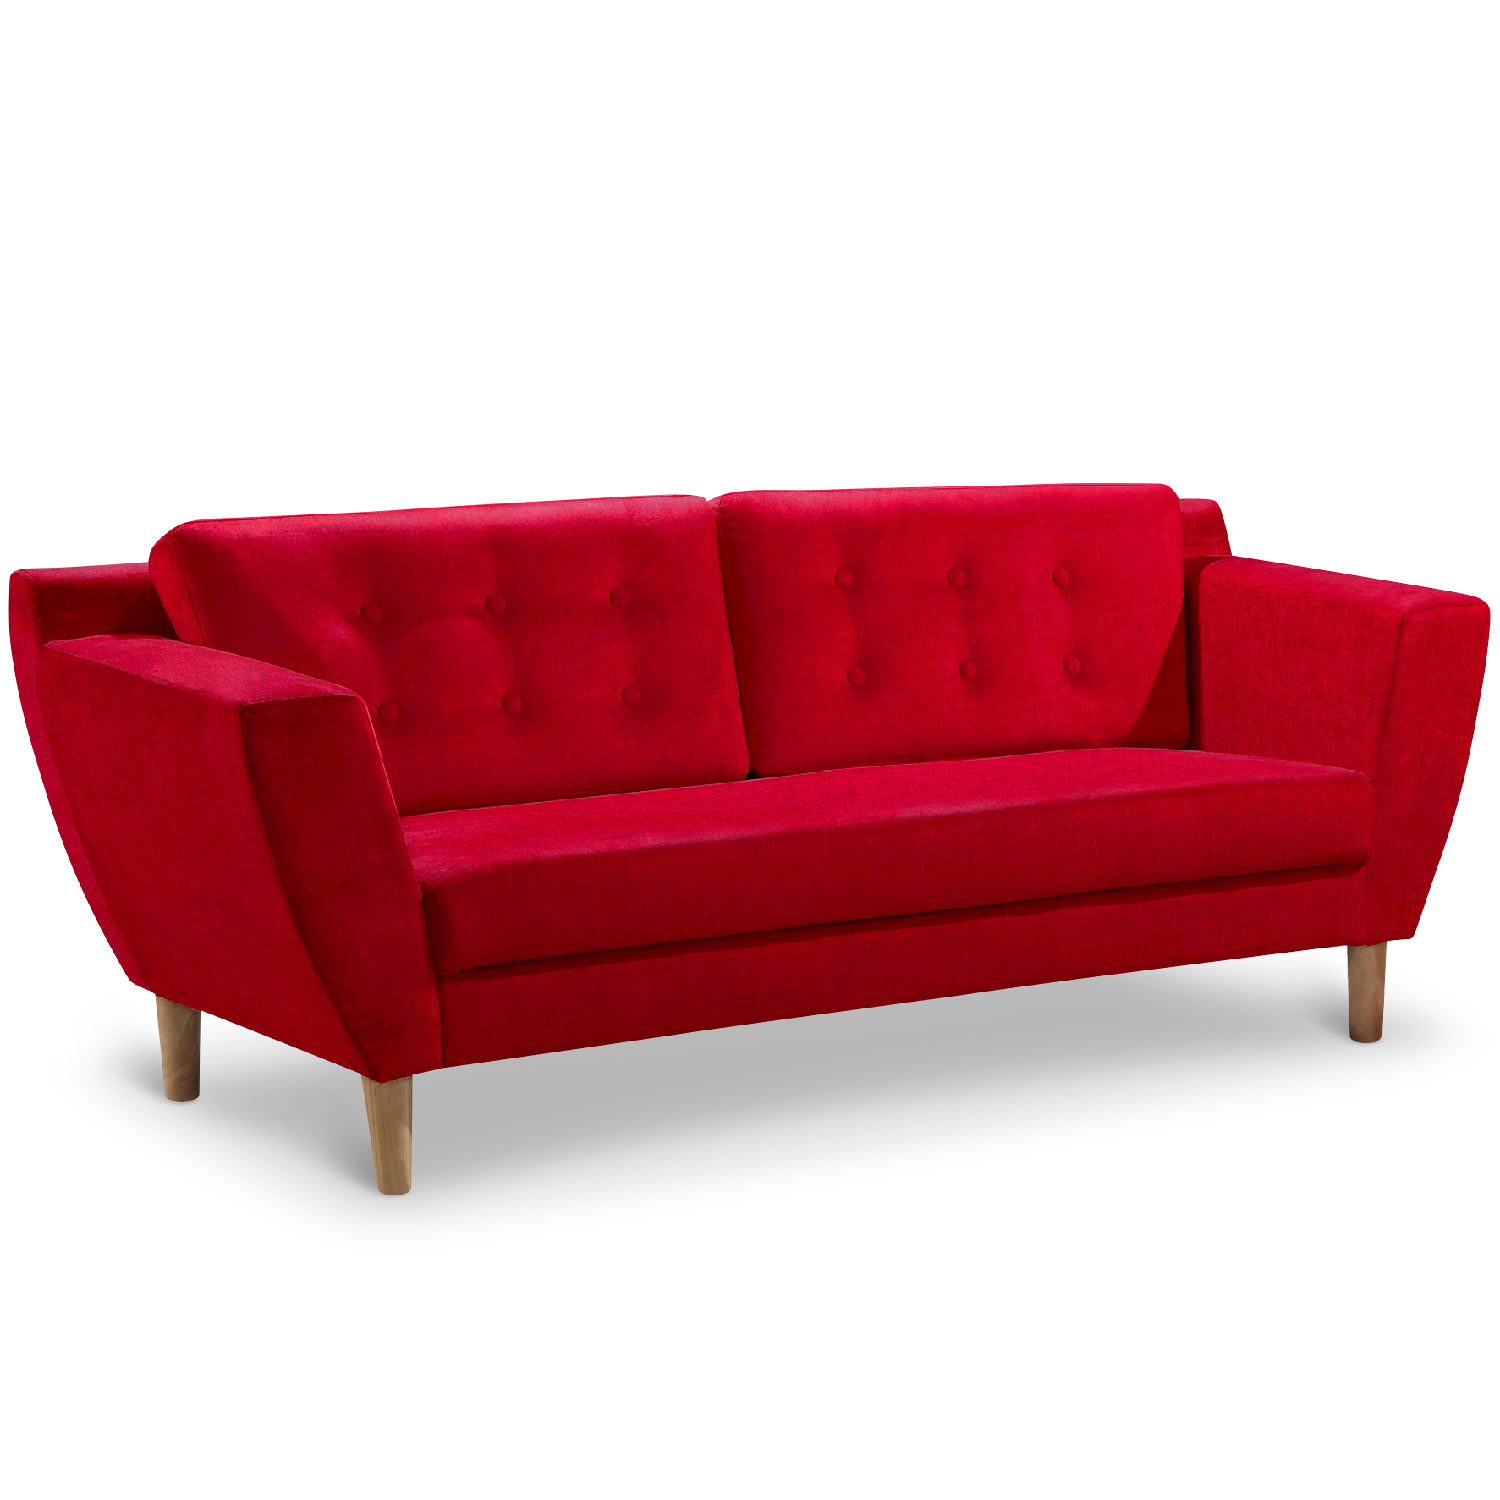 Gibus 3-Sitzer Sofa mit Stoffbezug Rot